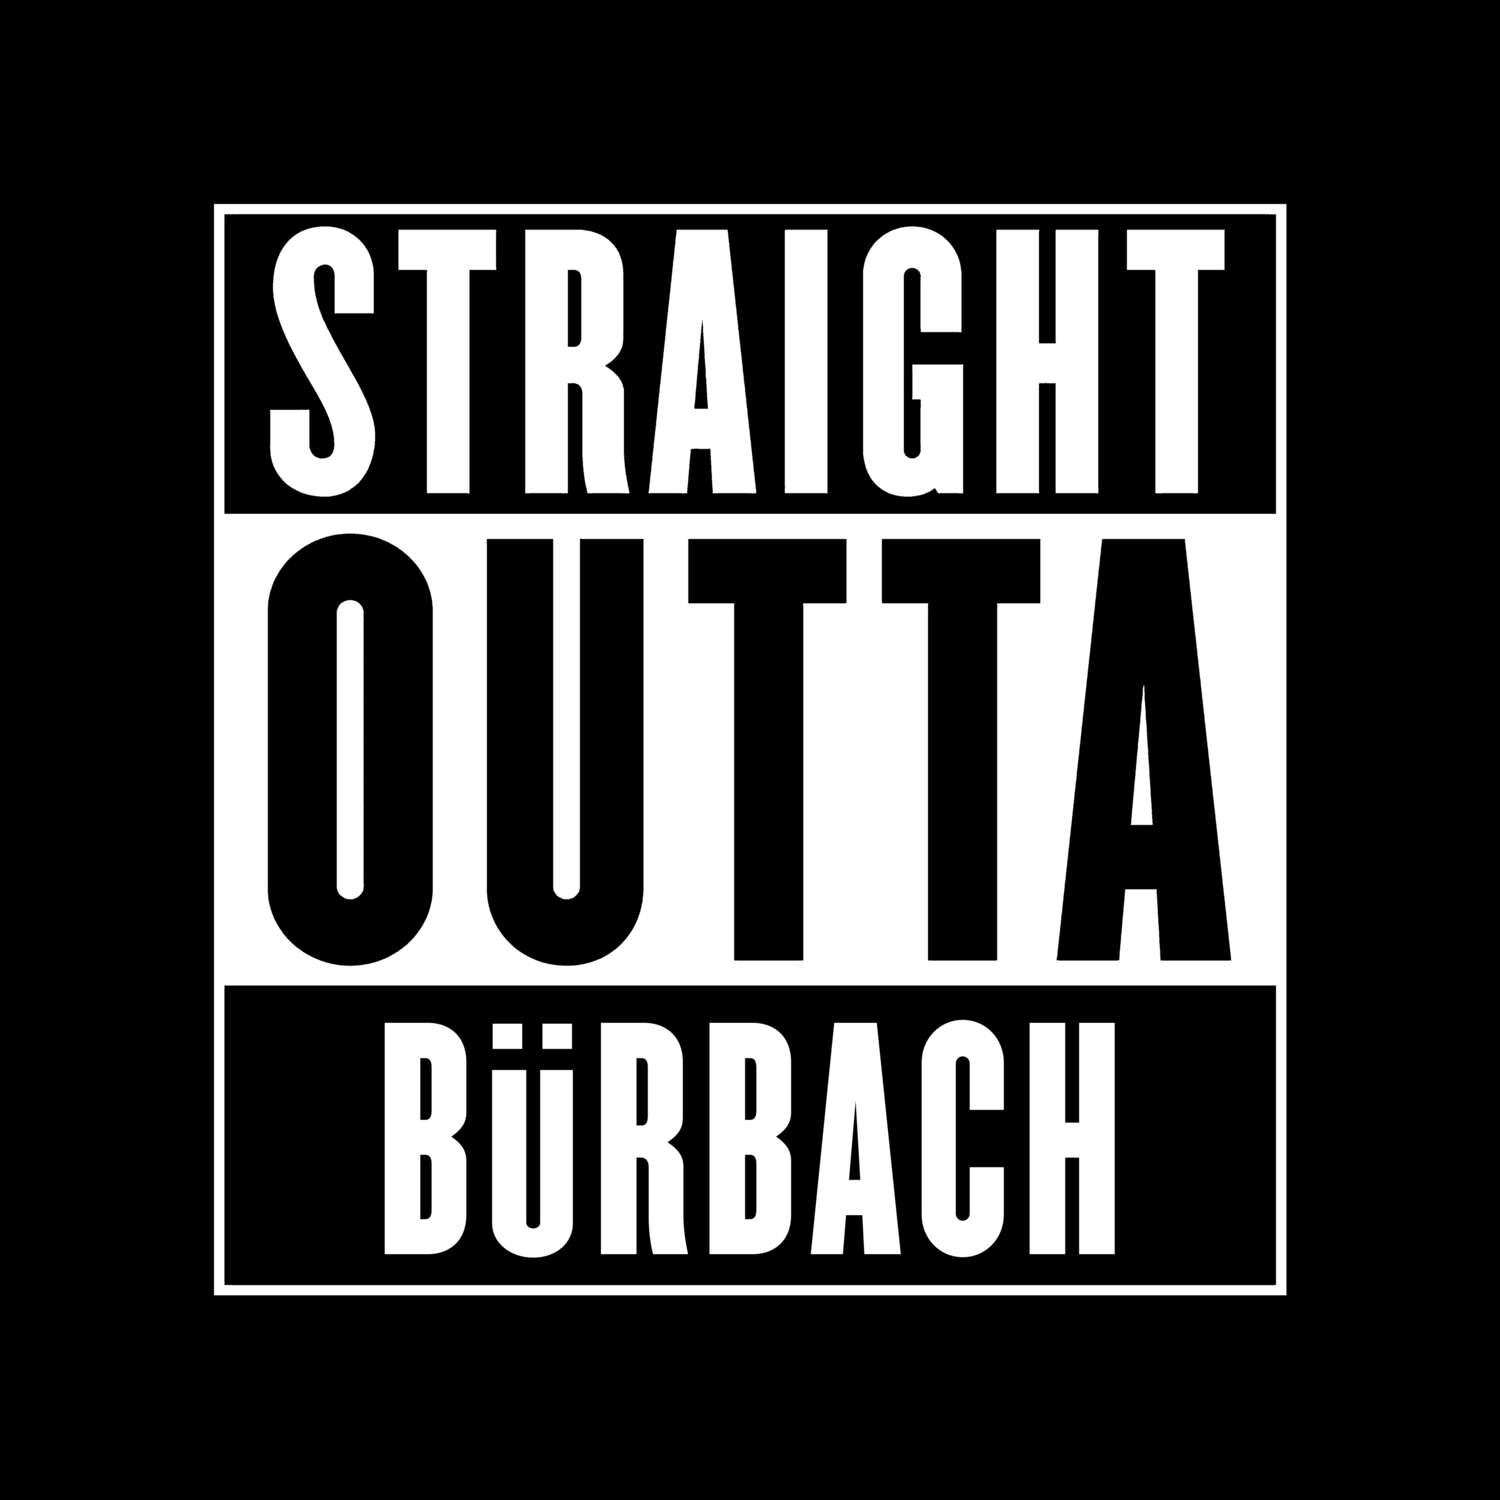 Bürbach T-Shirt »Straight Outta«